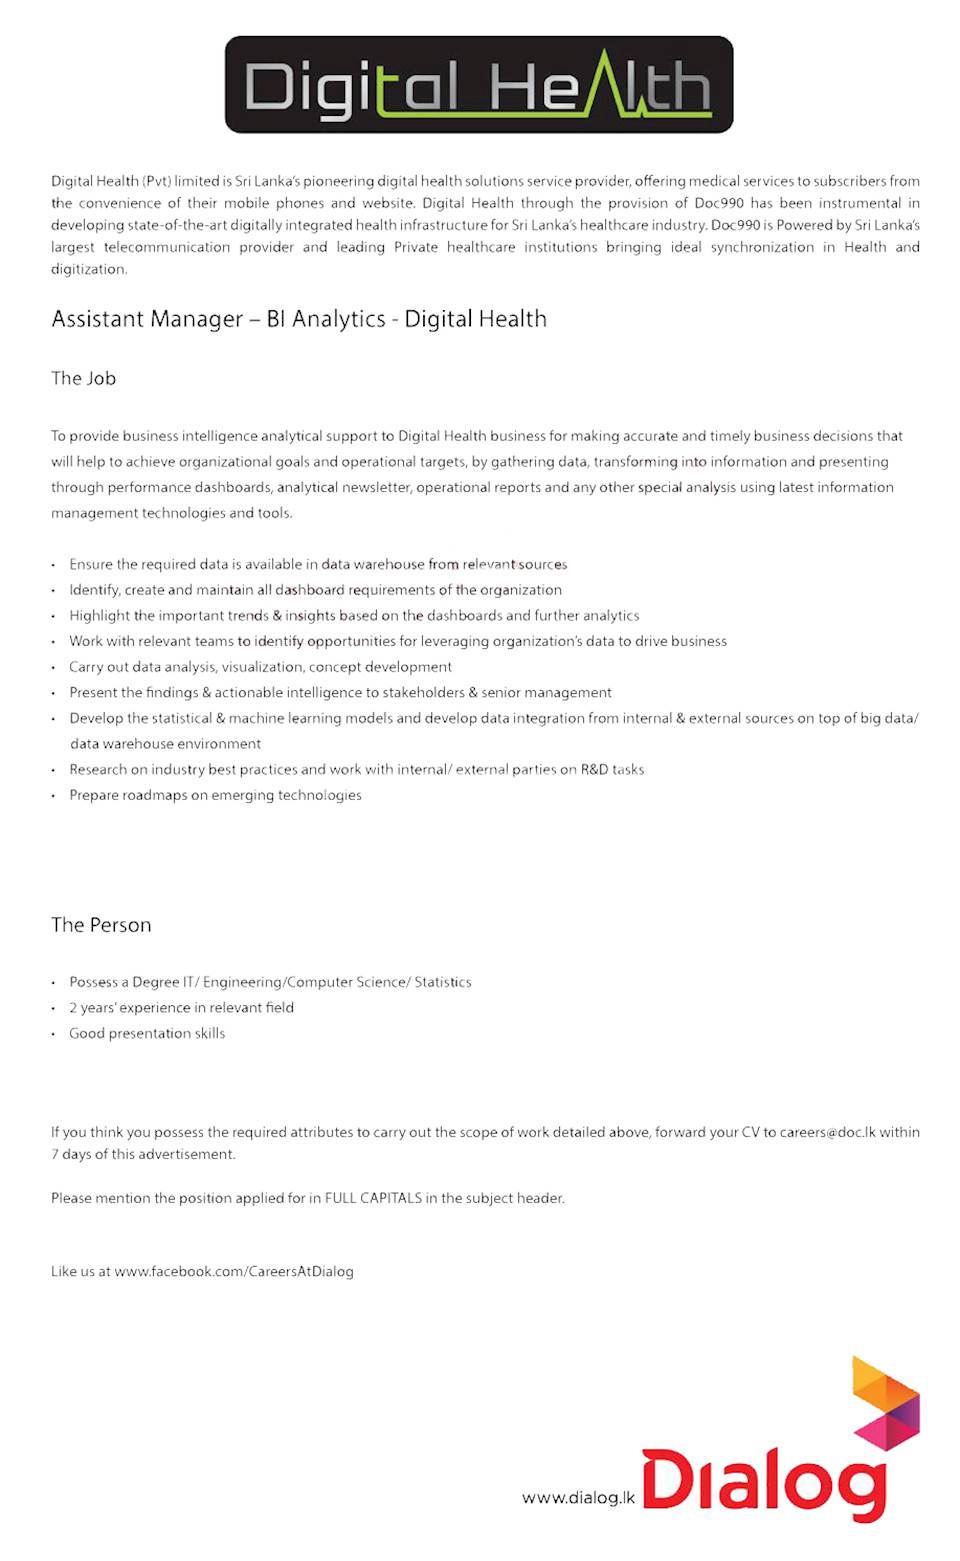 Assistant Manager - BI Analytics - Digital Health